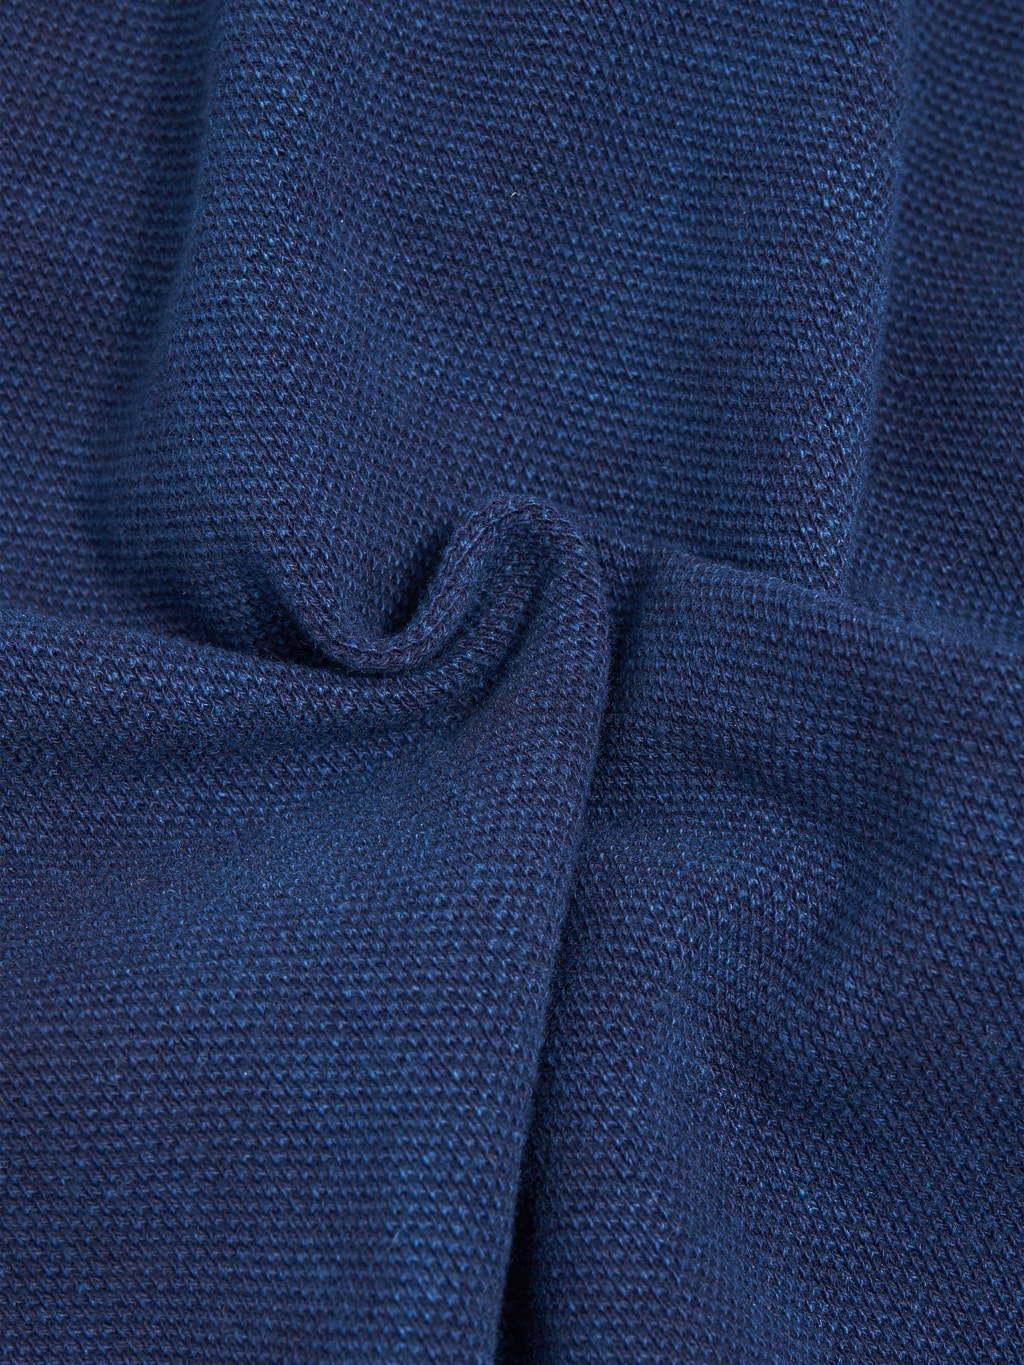 ues polo shirt indigo cotton fabric detail